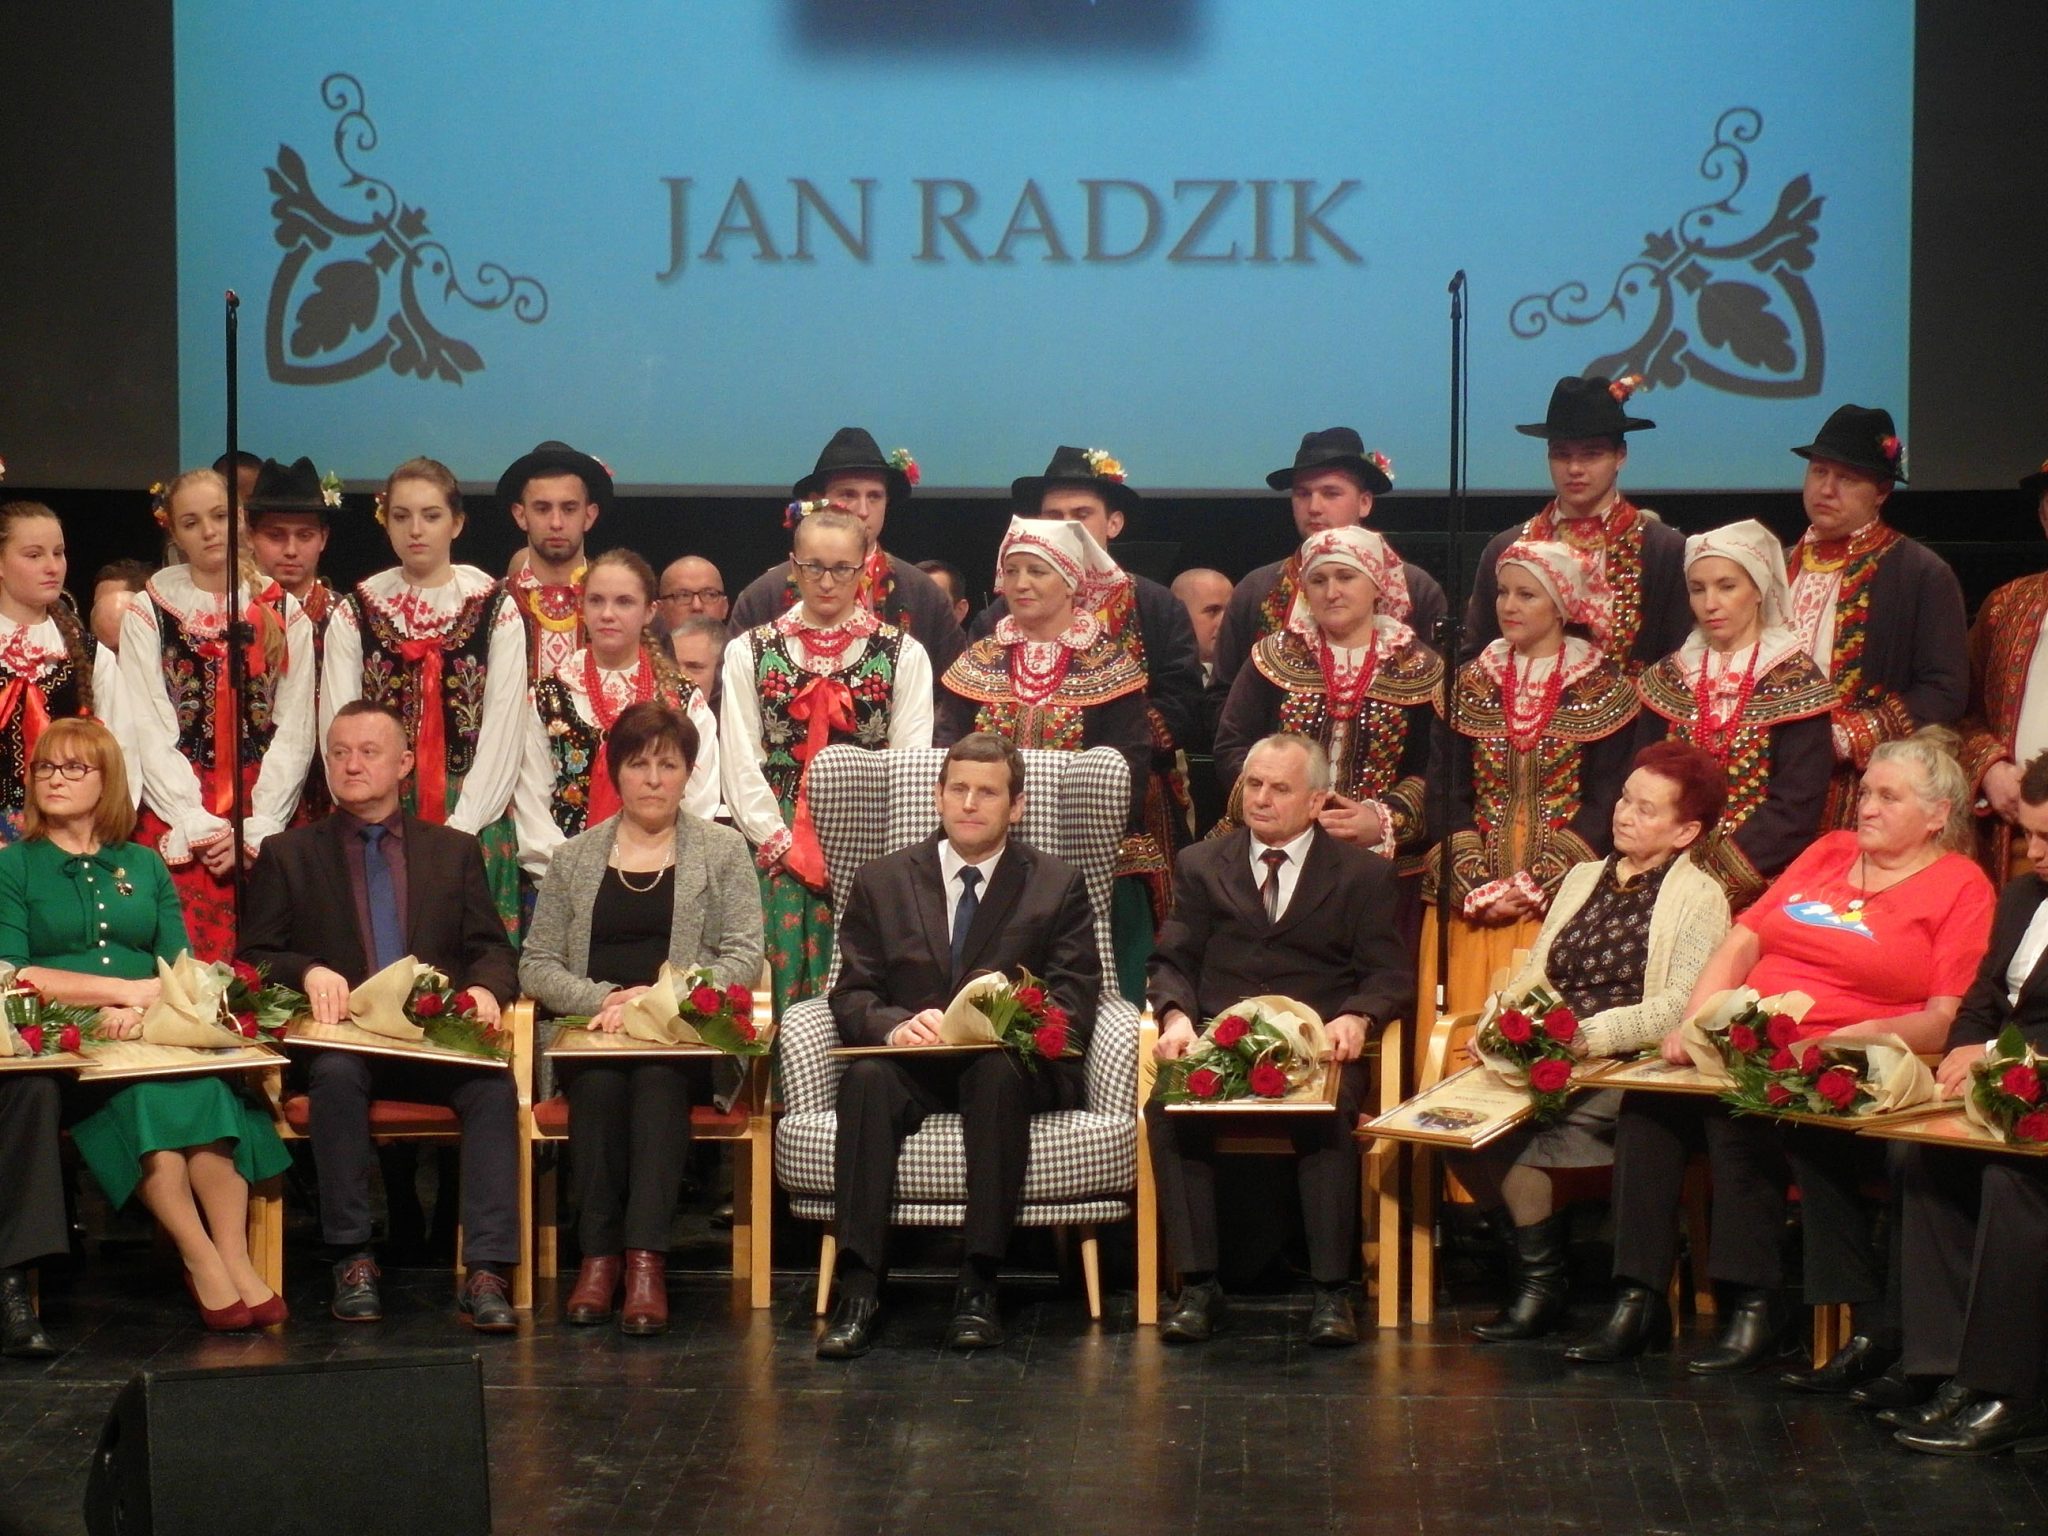 Jan Radzik – “Sądeczanin Roku 2016”